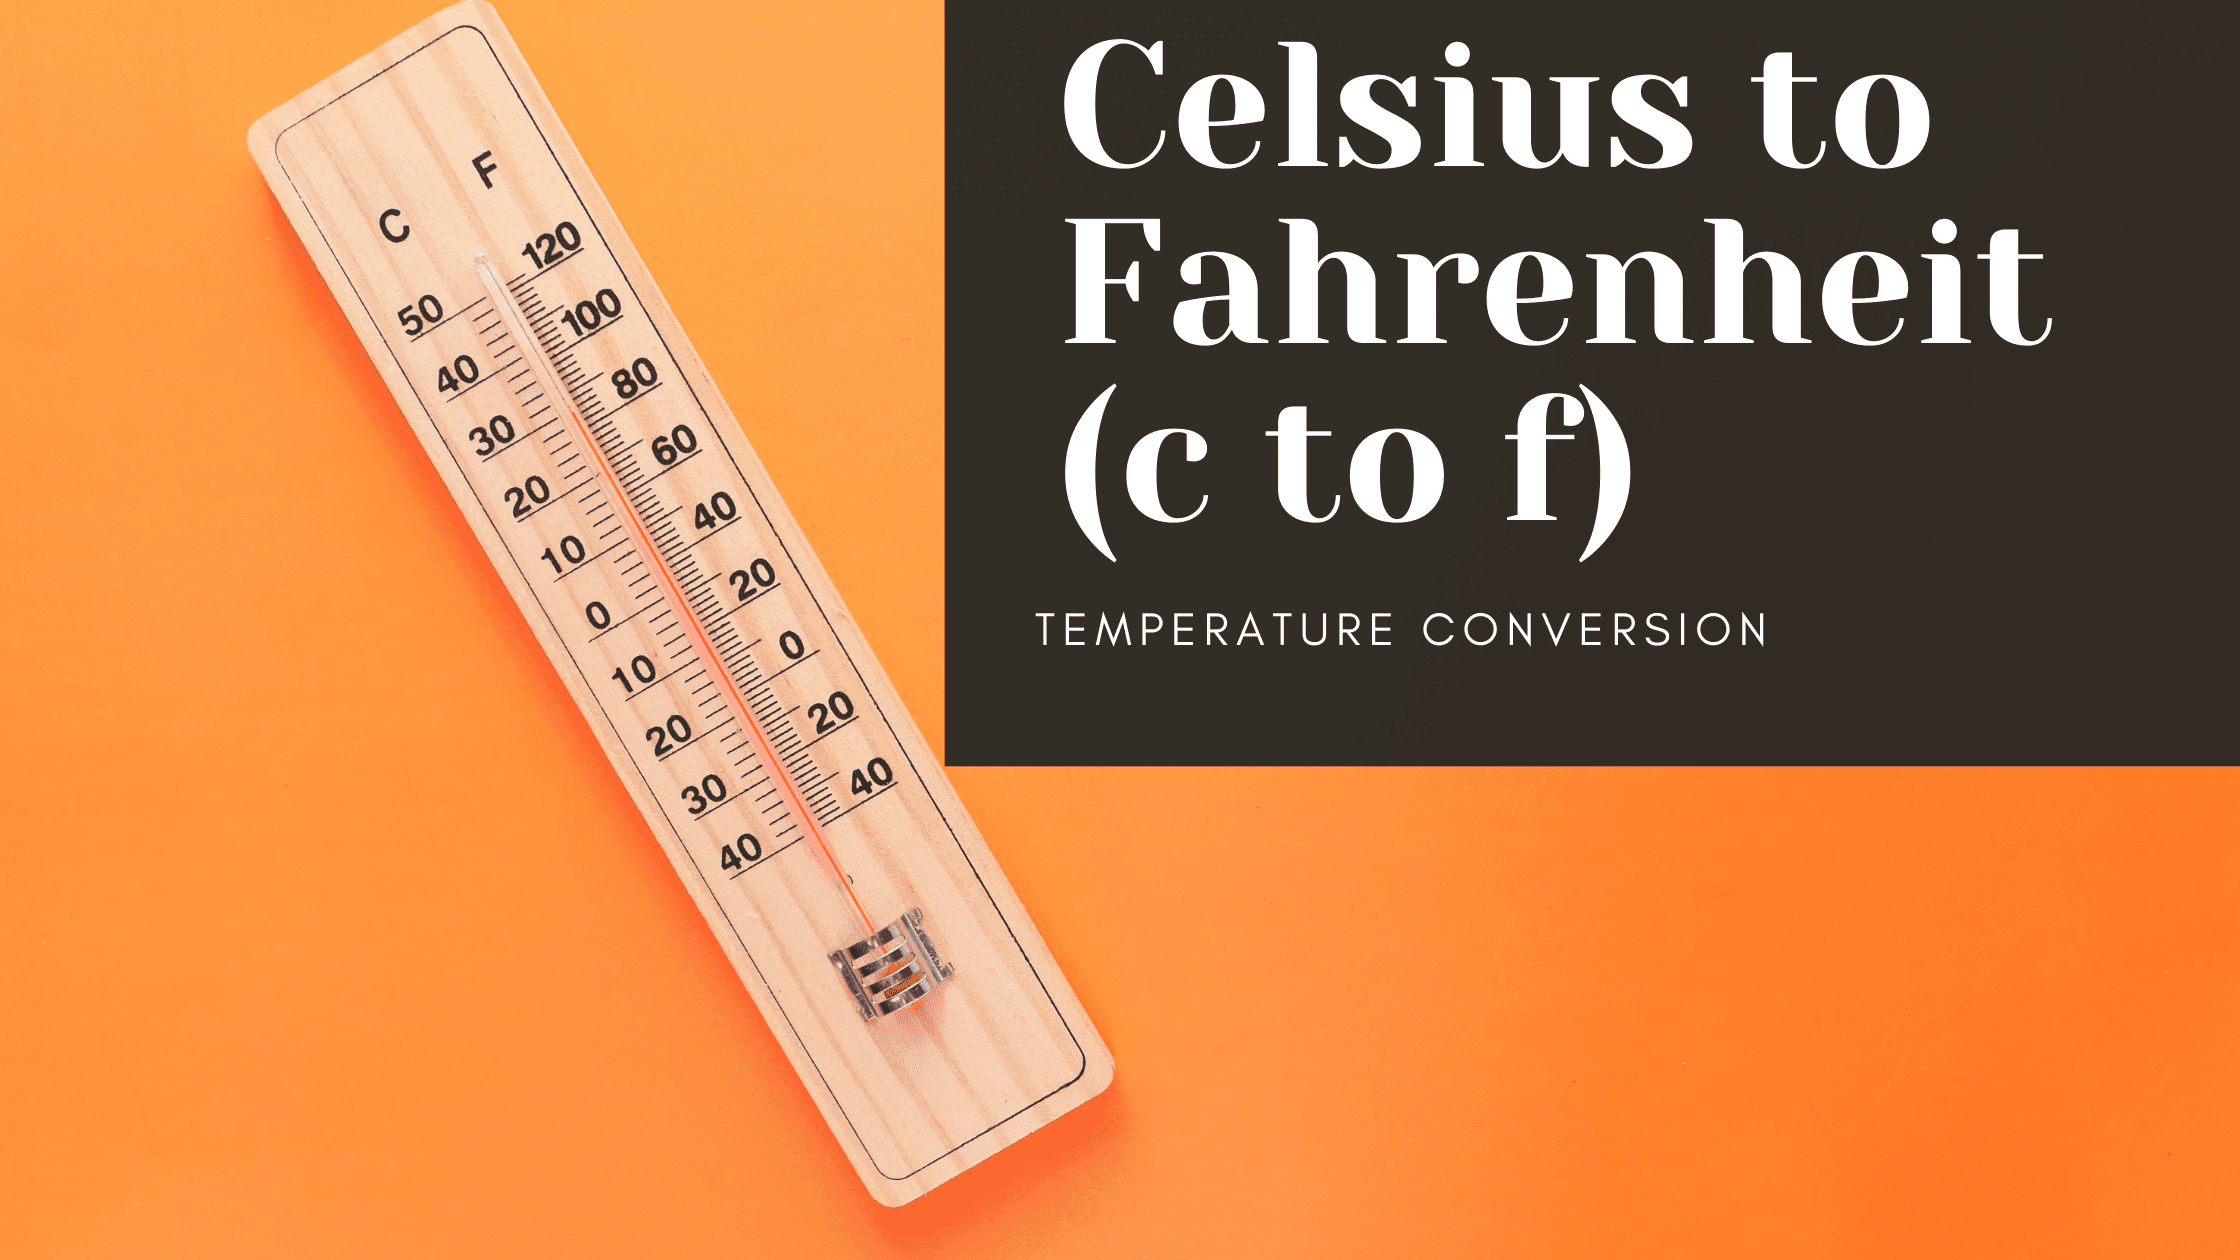 170 C to F Conversion Calculator (Celsius to Fahrenheit)